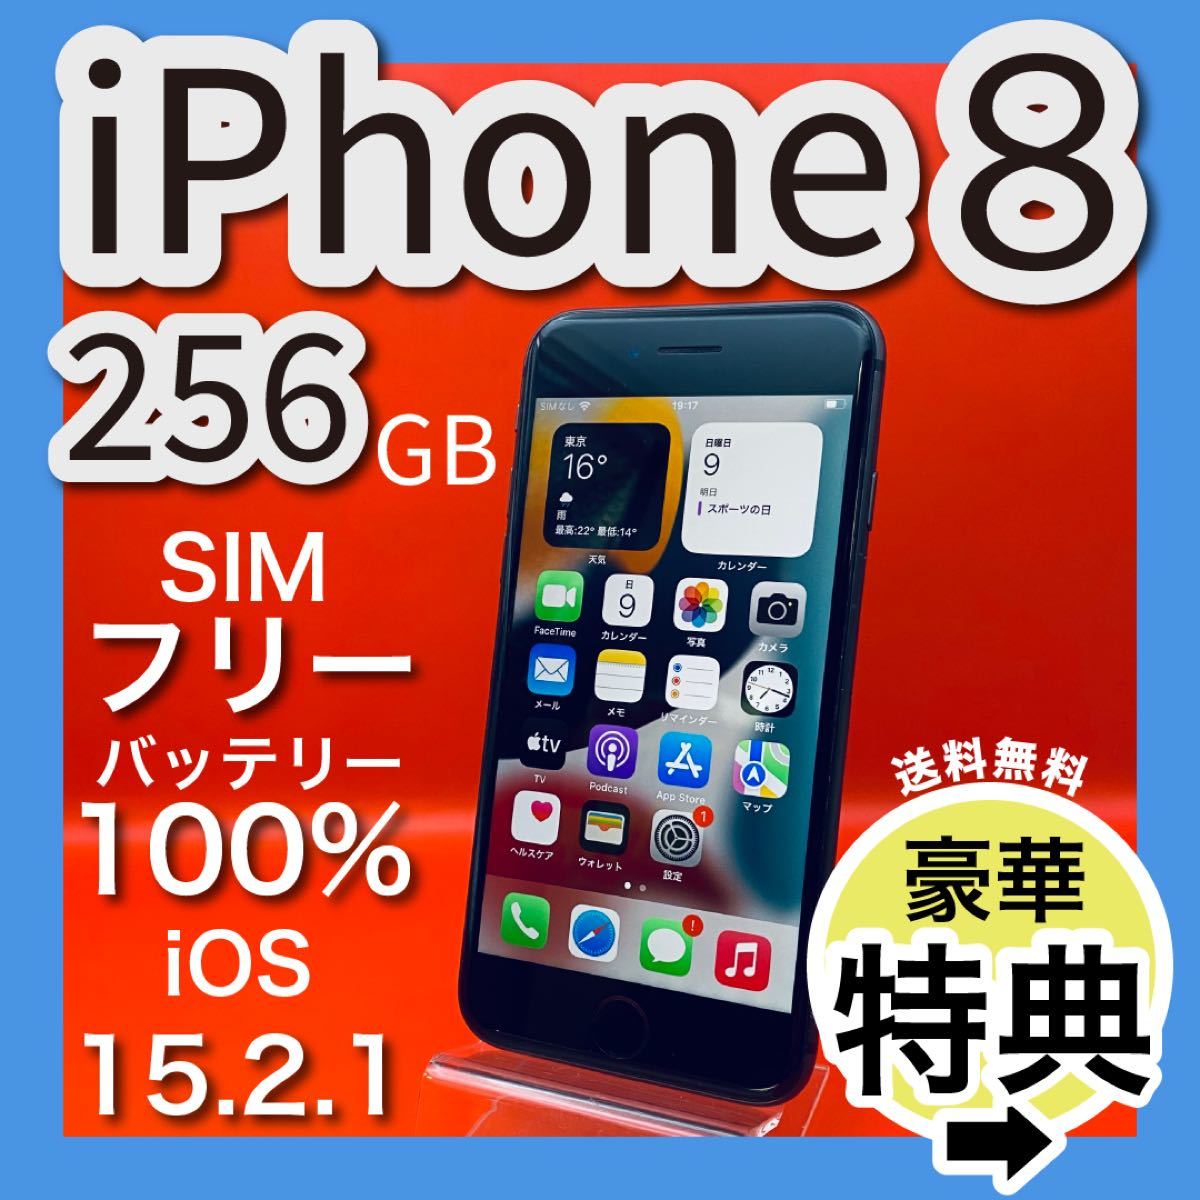 iPhone X Space Gray 256 GB SIMフリーバッテリ93% estim.sn